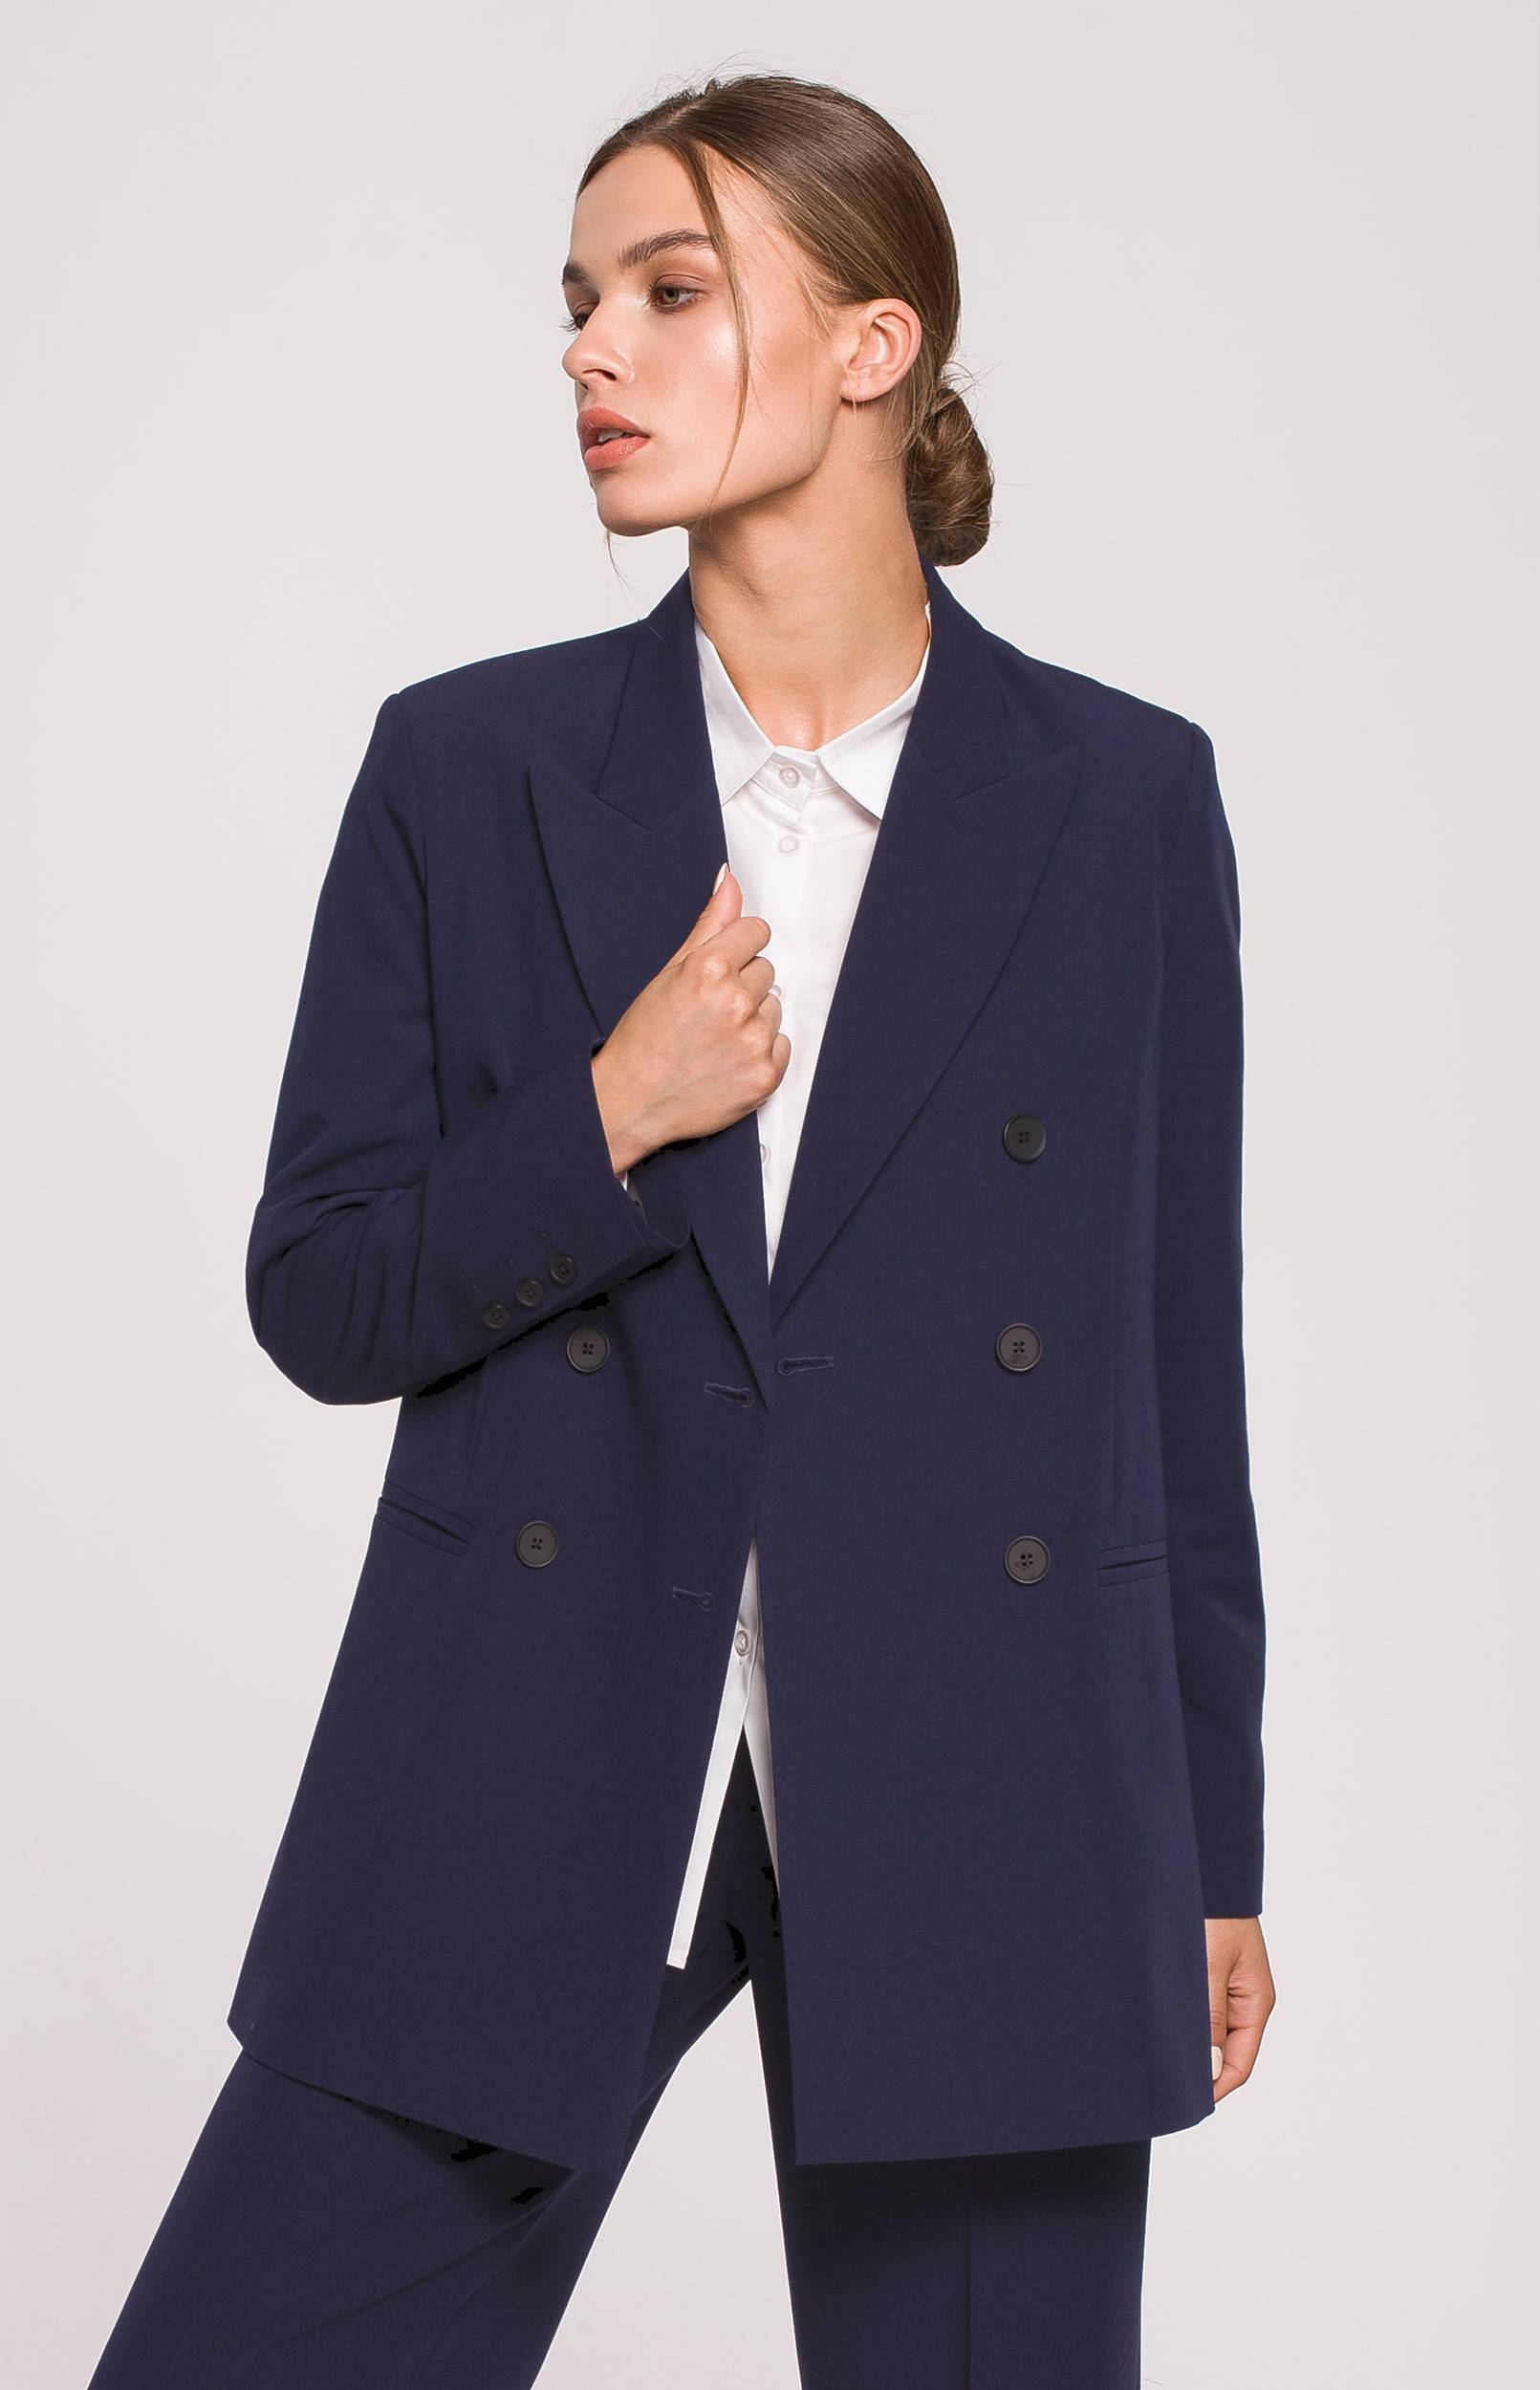 Navy blue doublebreasted blazer